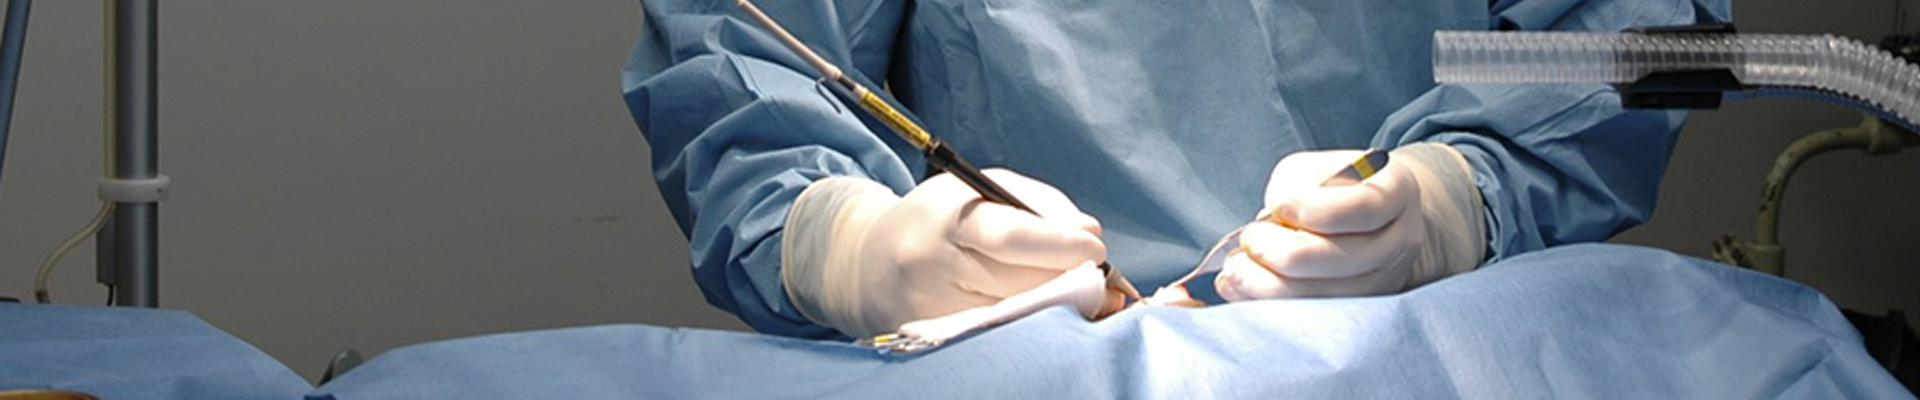 Kidney Stone Laser Treatment & Surgery | Chennai Kidney Care